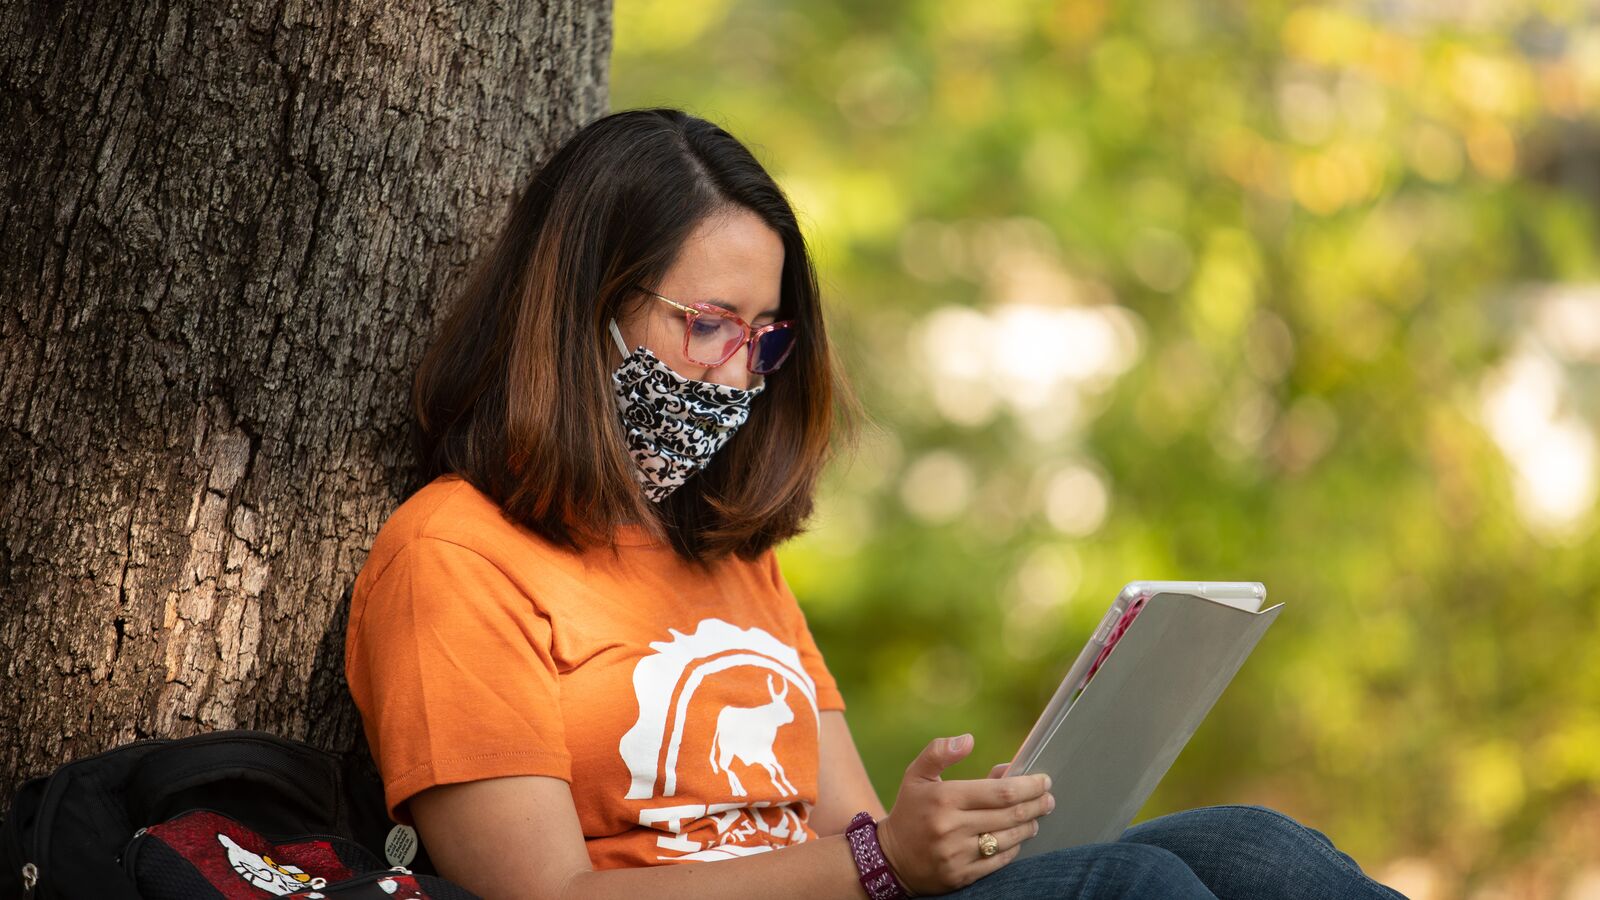 A UT Austin student studies on campus